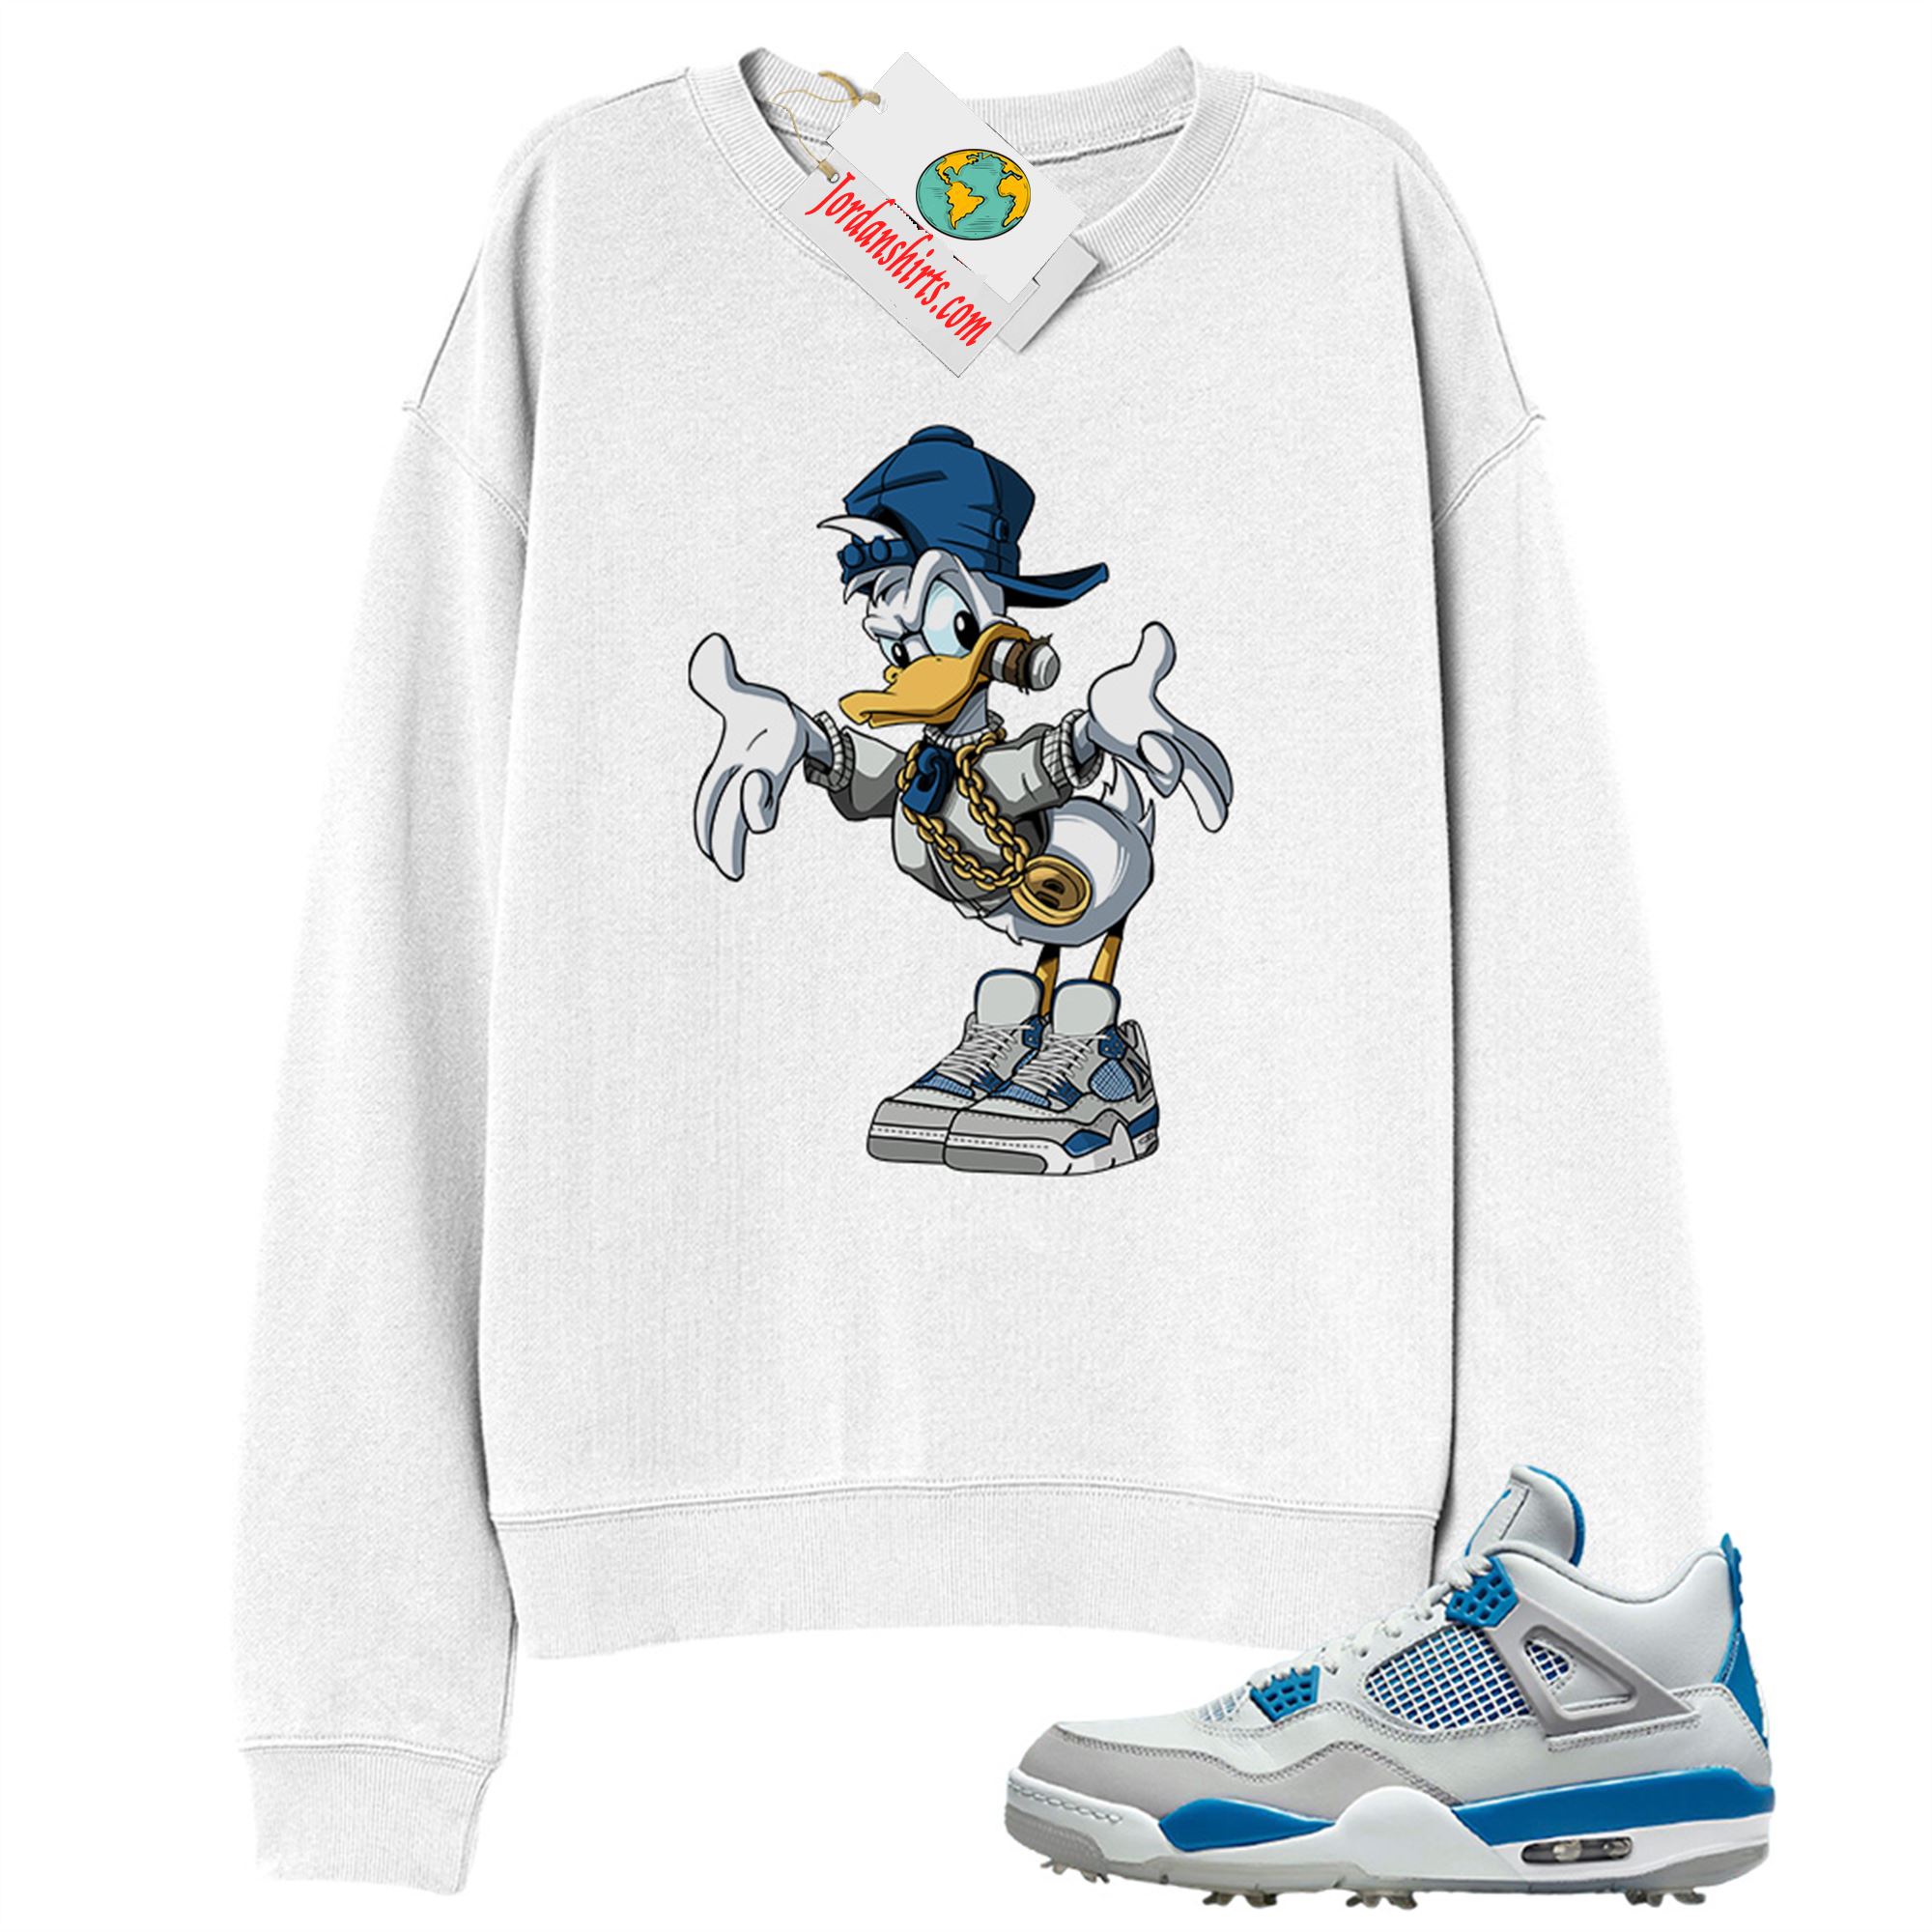 Jordan 4 Sweatshirt, Donald Duck White Sweatshirt Air Jordan 4 Golf Military Blue 4s Size Up To 5xl